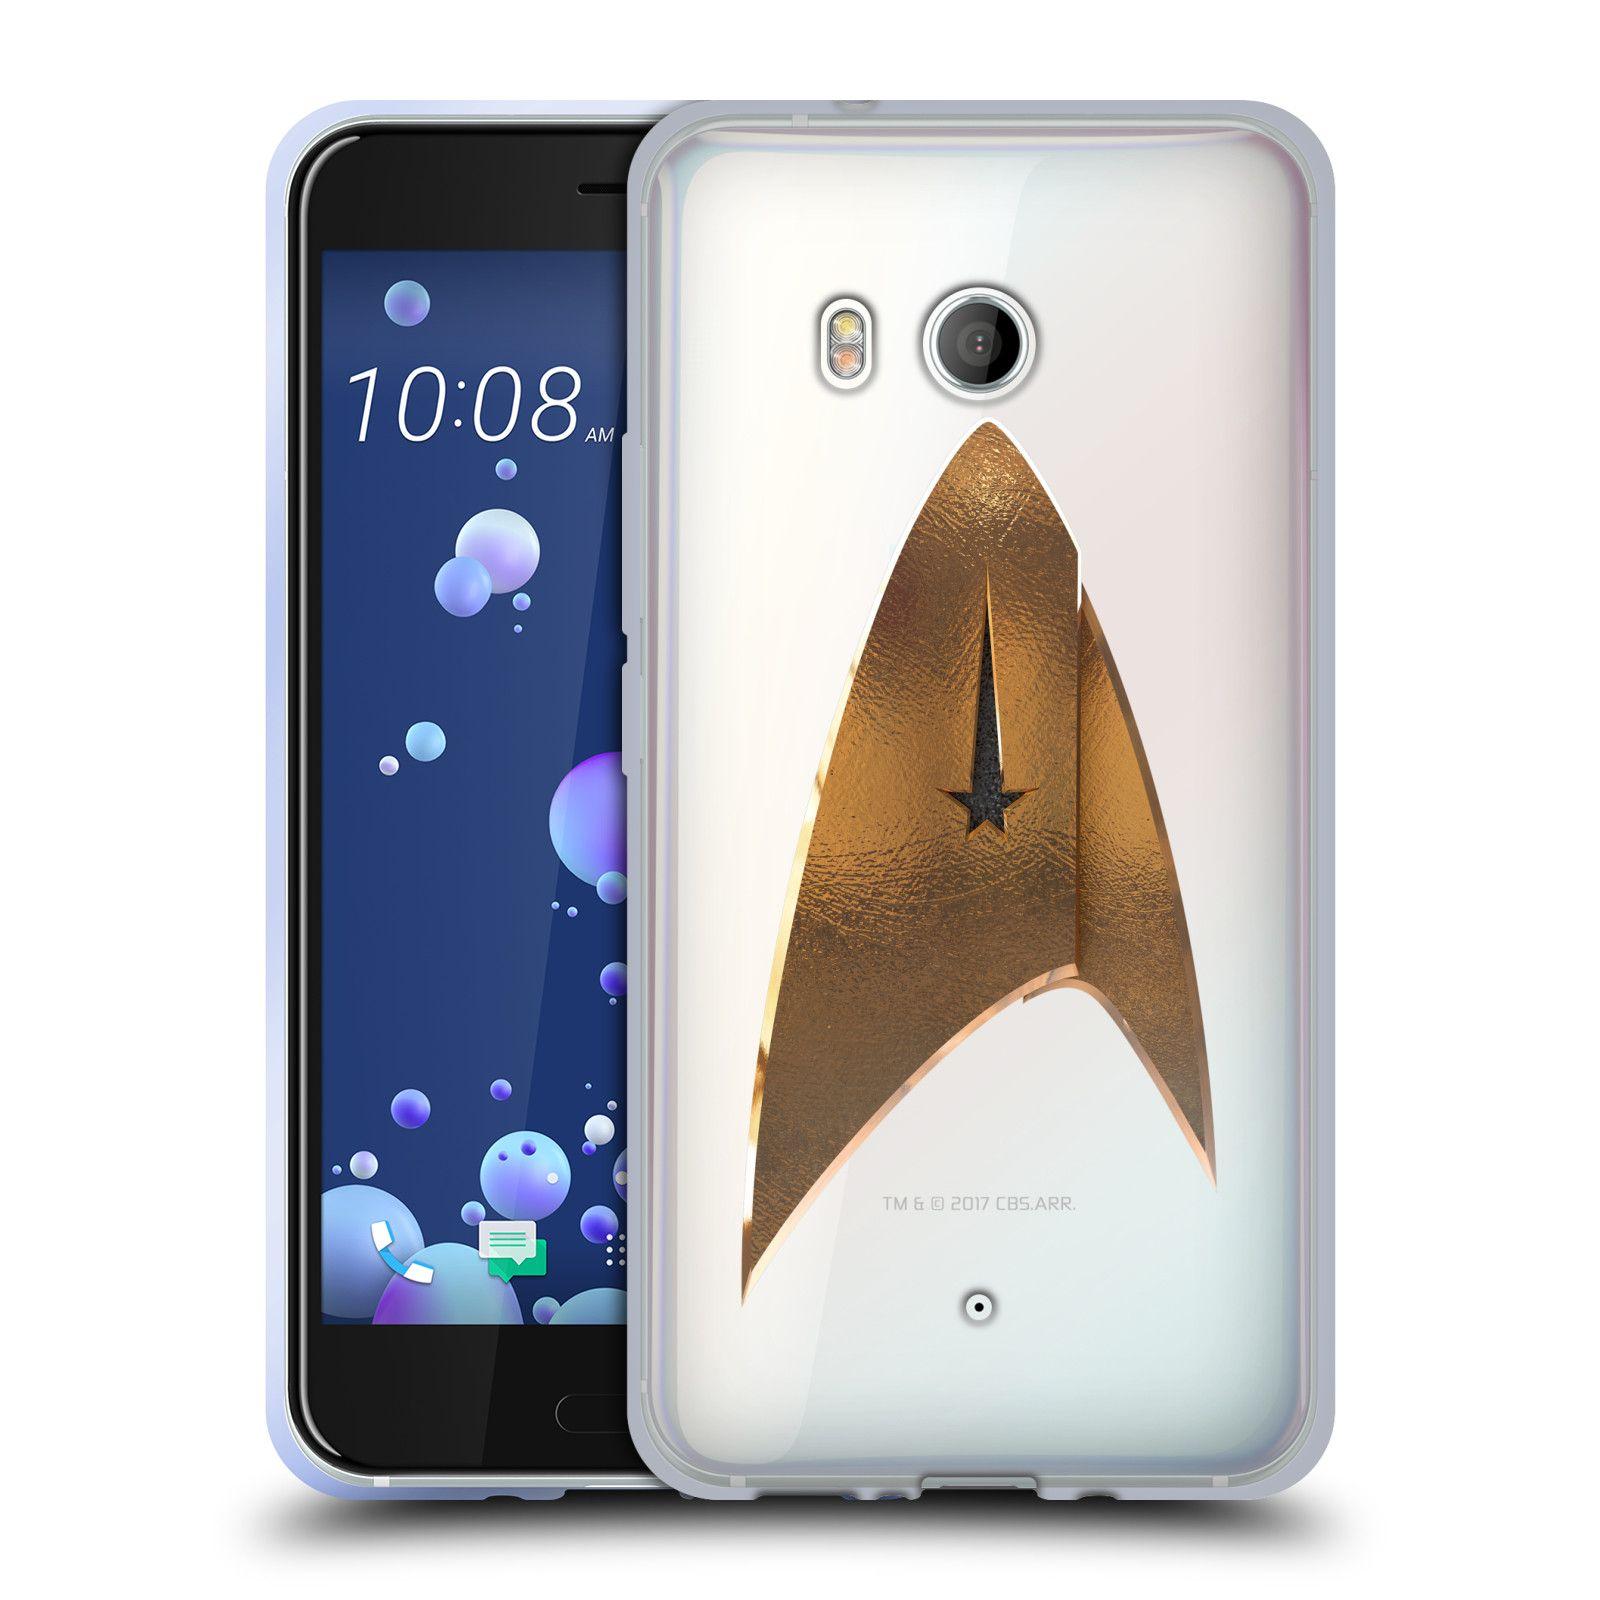 A9 Logo - Official Star Trek Discovery Logo Soft GEL Case for HTC PHONES 1